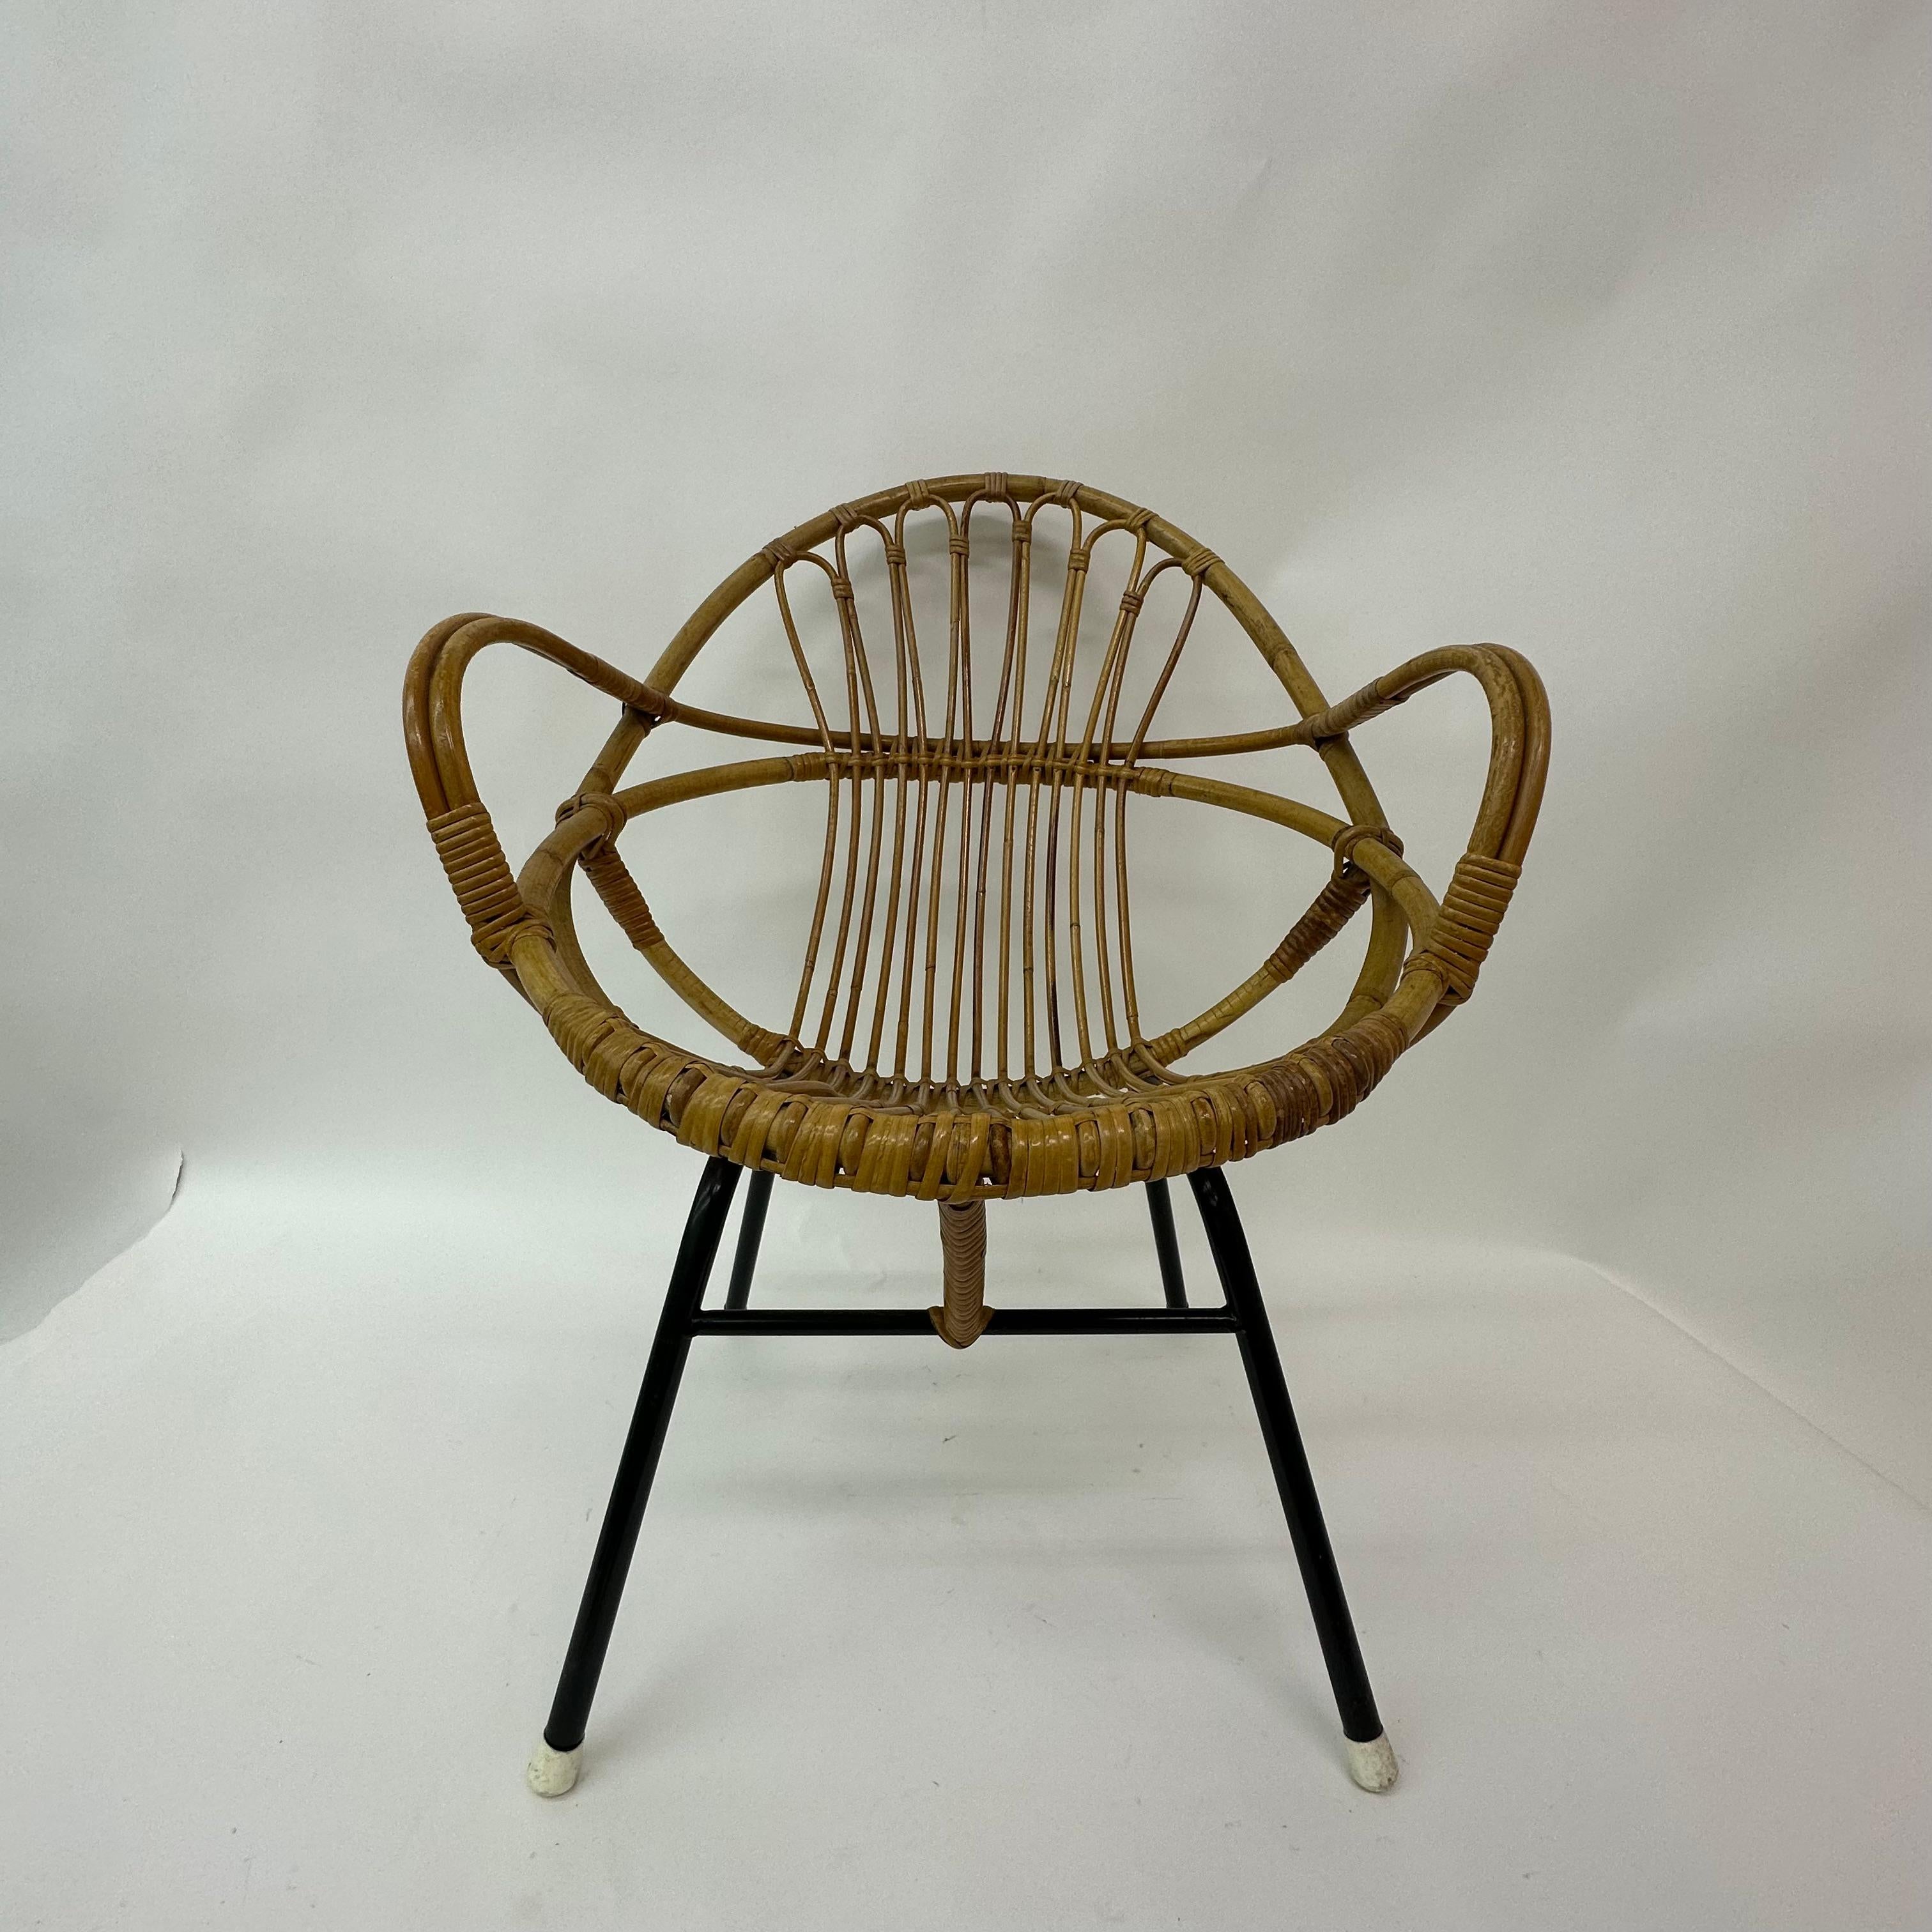 Rohe Noordwolde rattan lounge chair, 1950’s

Dimensions: 77cm H, 60cm D, 59cm W, 37cm H seat
Period: 1950’s